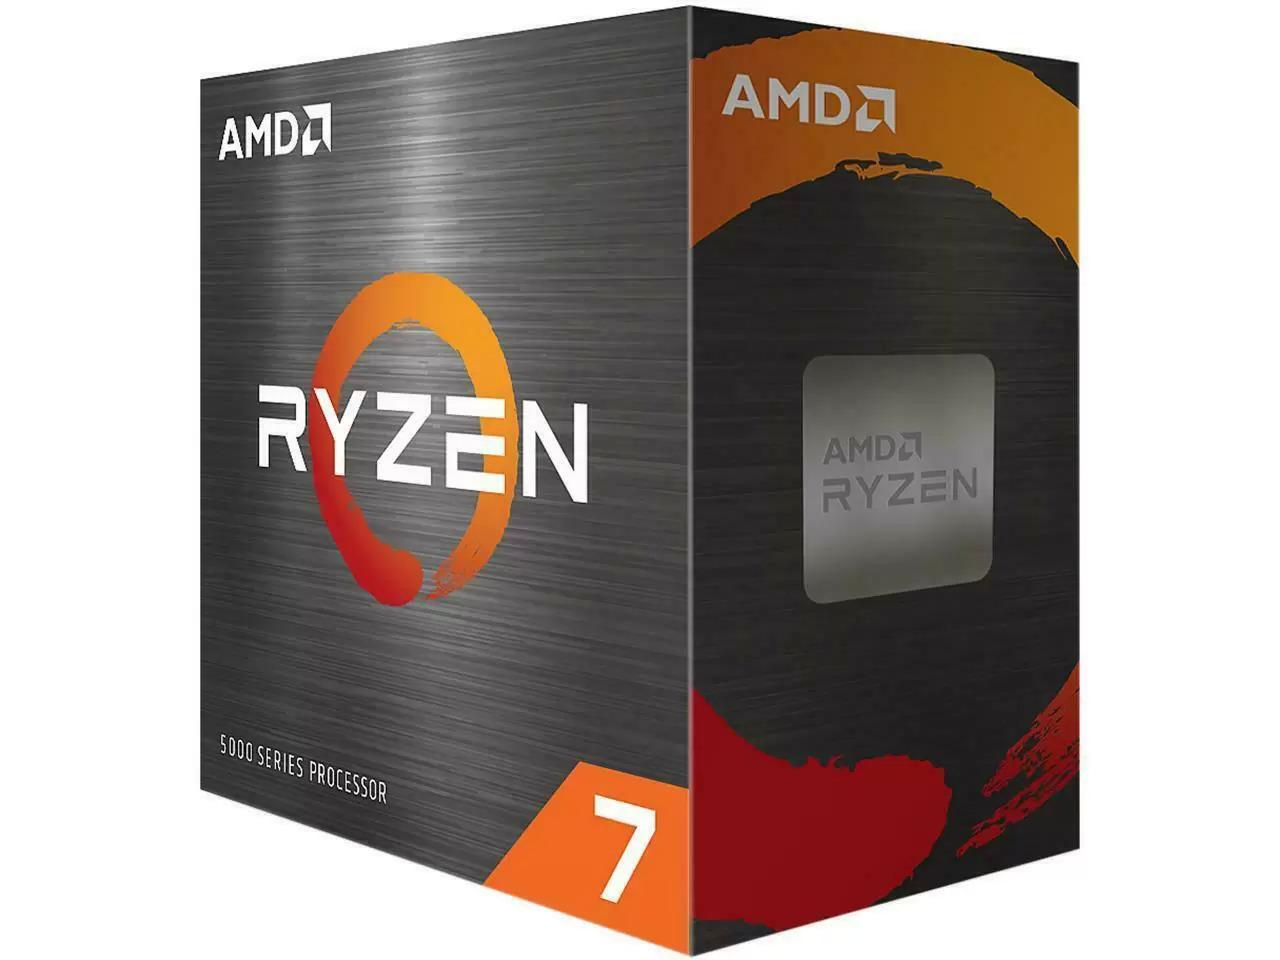 AMD Ryzen 7 5800X 3.8 GHz Eight-Core AM4 Processor for $245.71 Shipped